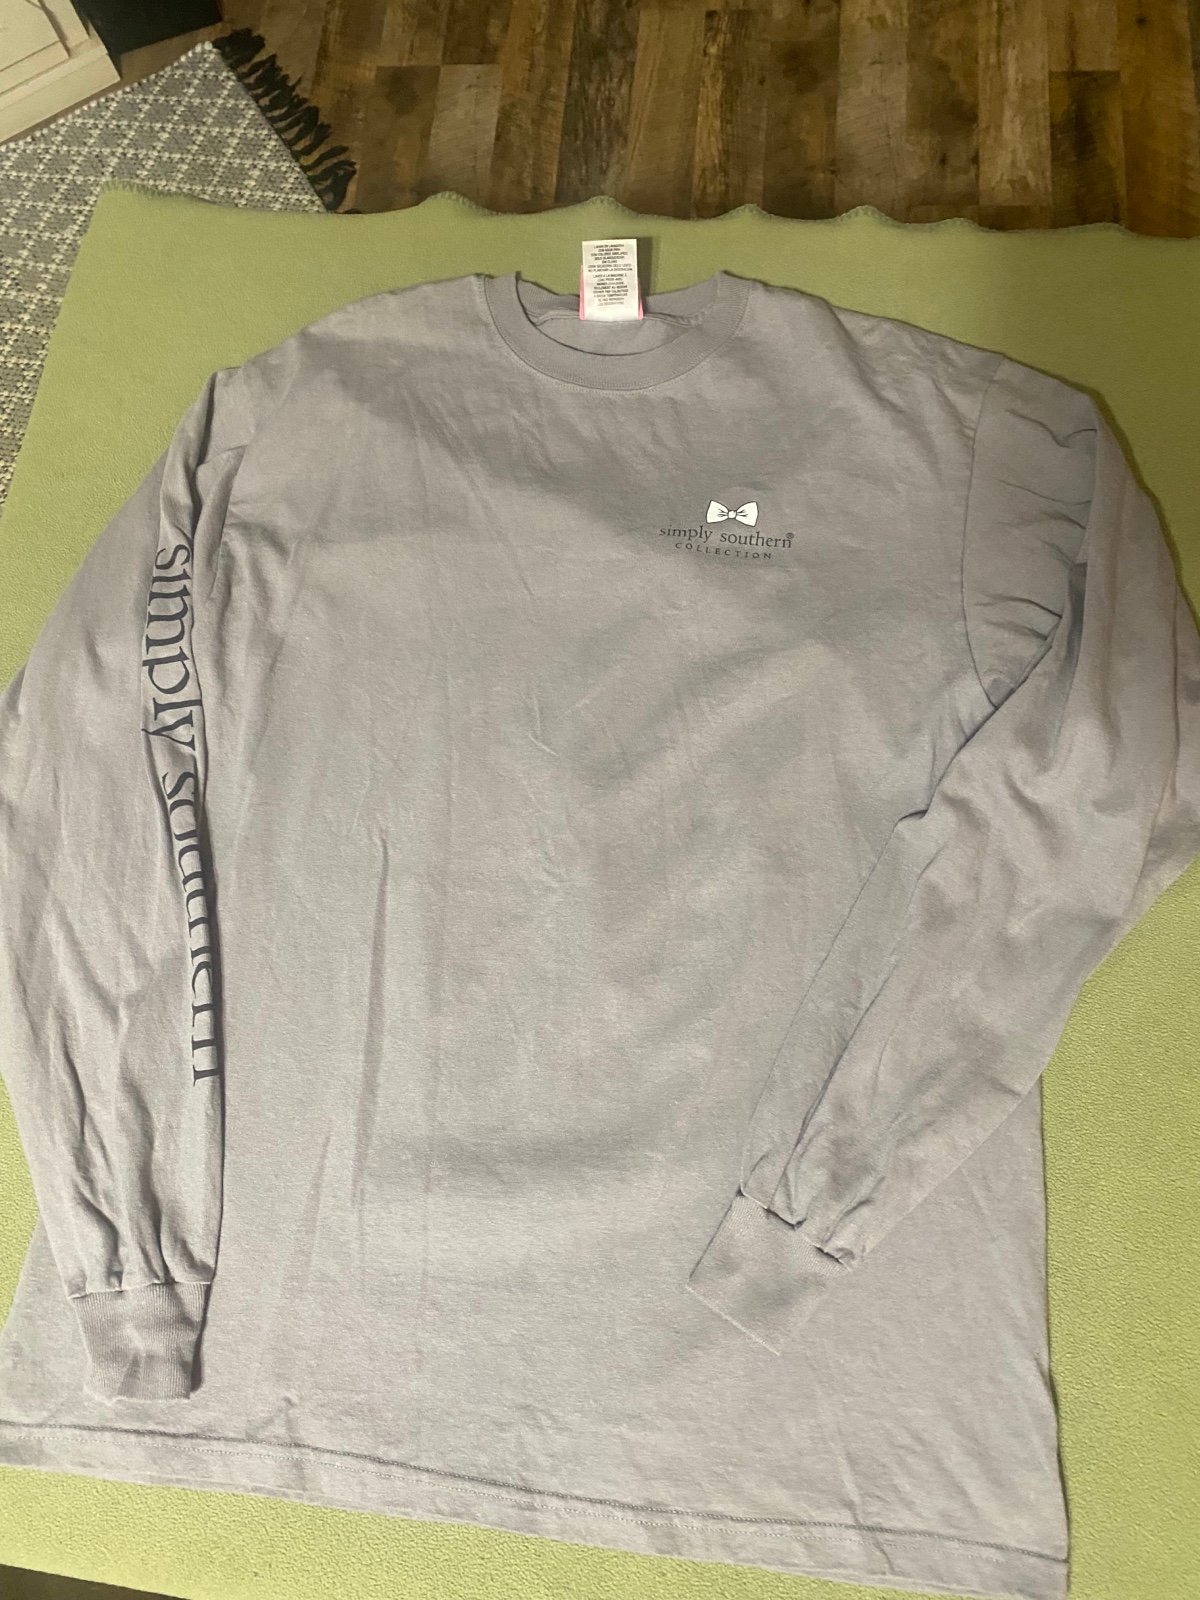 Wholesale price Simply Southern Long Sleeve Shirt N6pJp